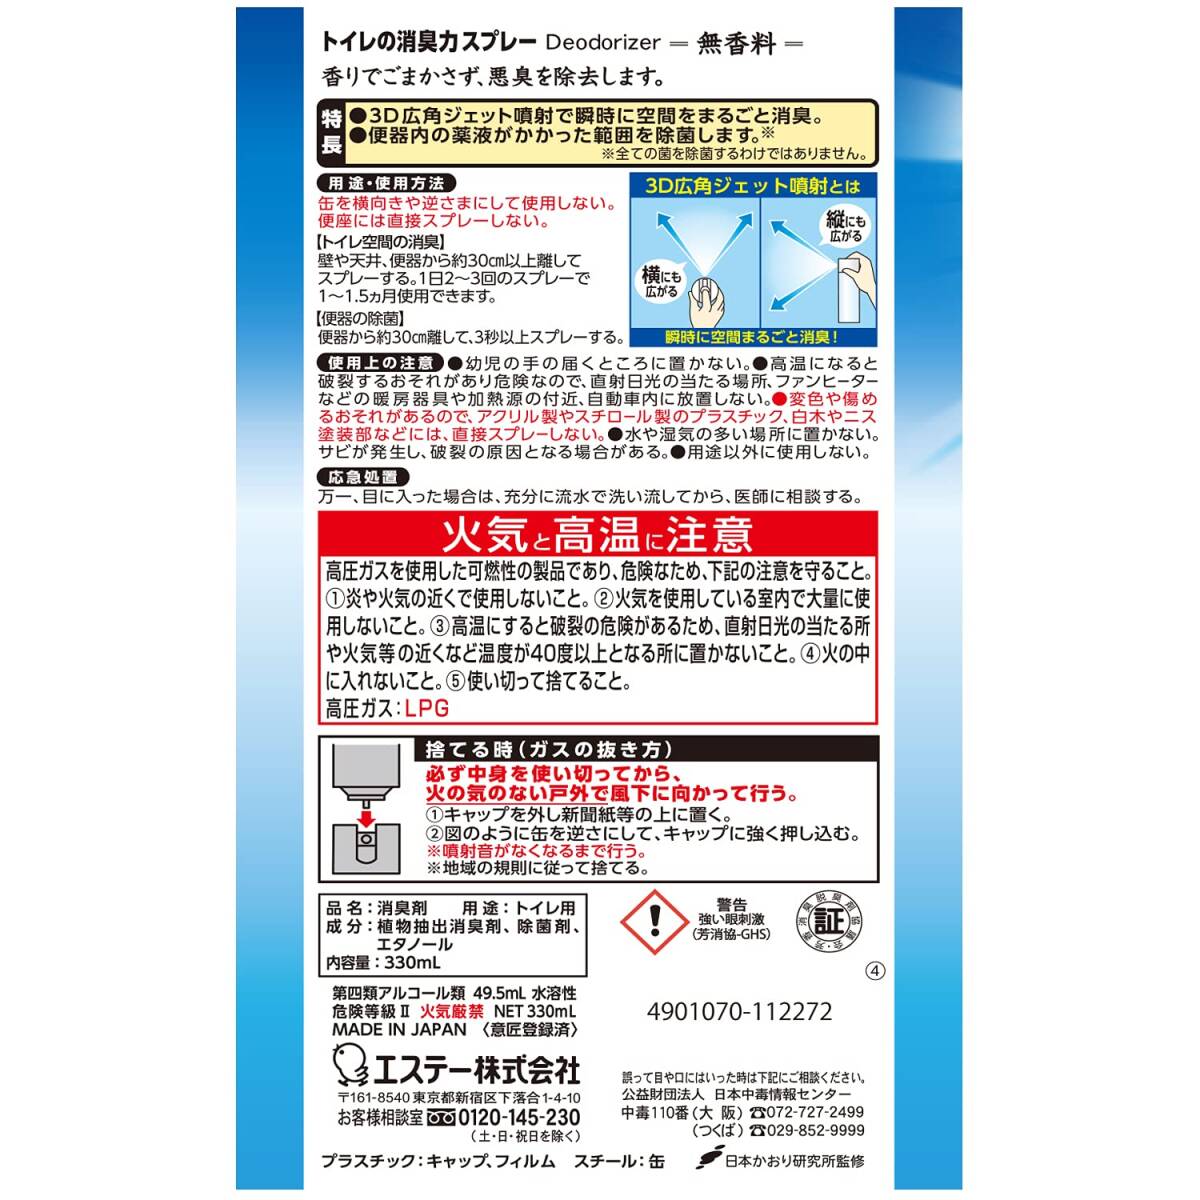 [ bulk buying ] toilet. deodorization power for rest room fragrance free 330ml×6 piece toilet deodorization deodorant deodorization aromatic 